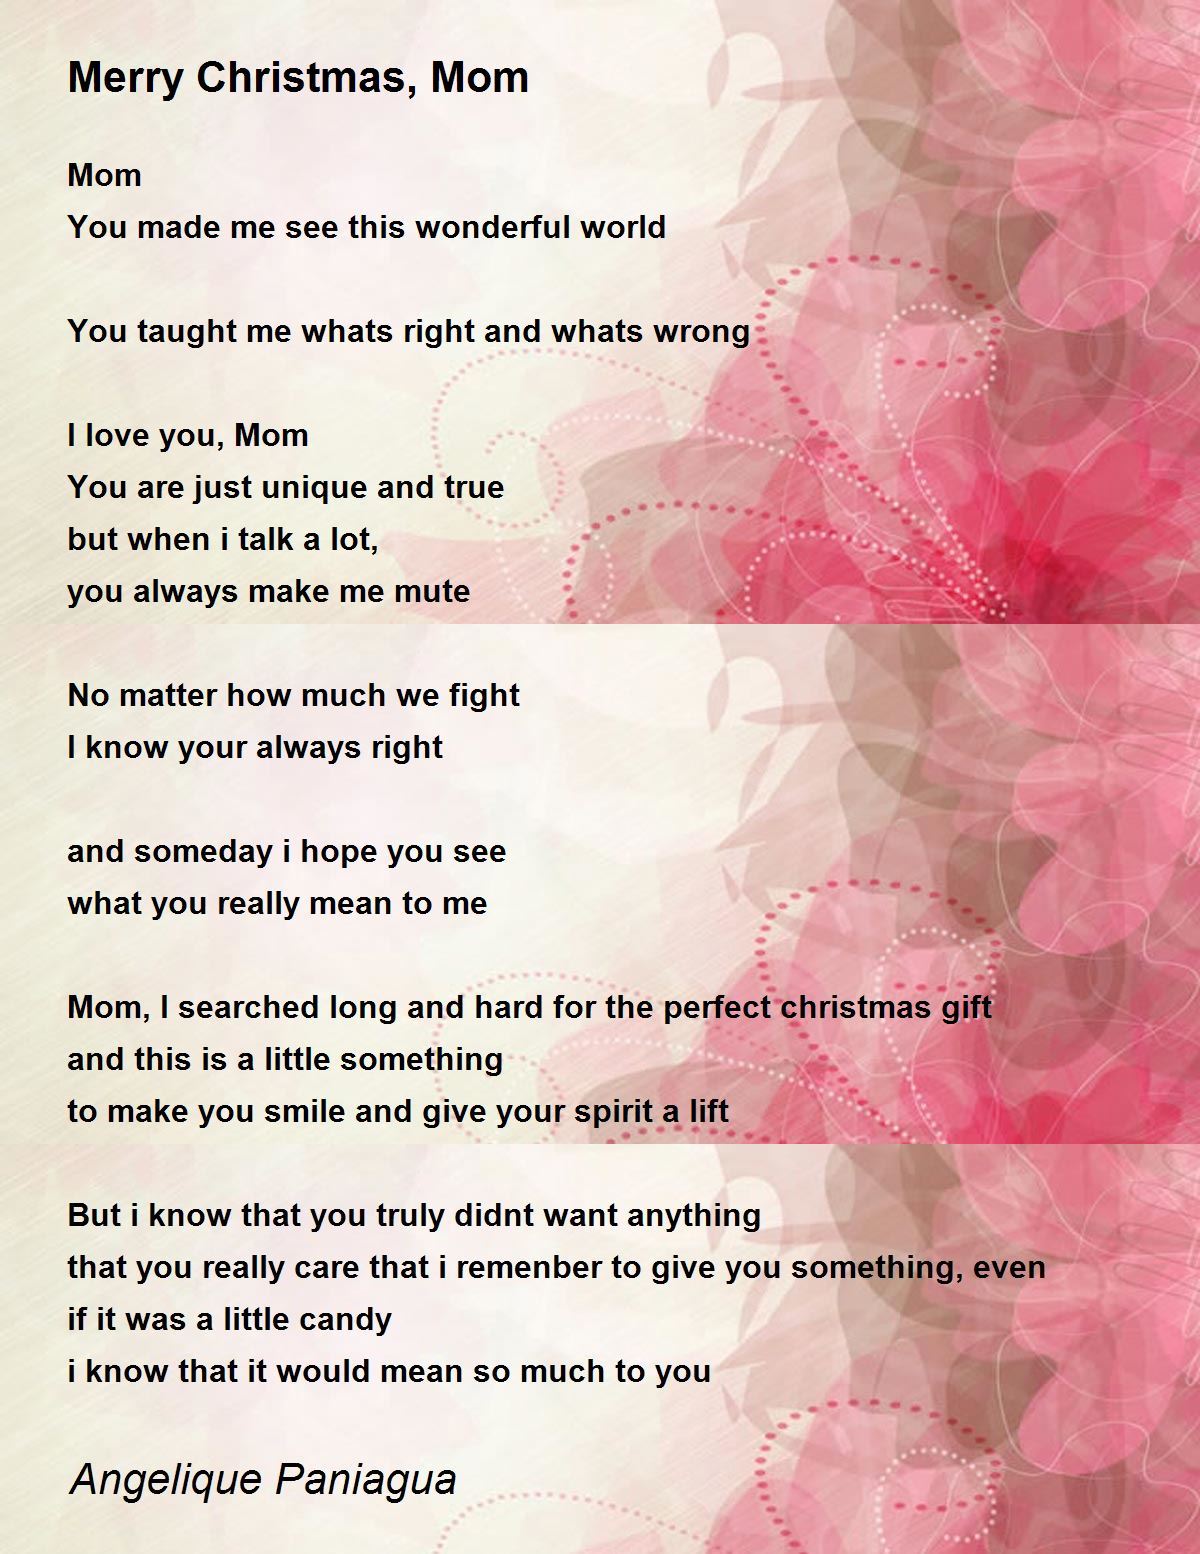 Merry Christmas, Mom - Merry Christmas, Mom Poem by Angelique Paniagua